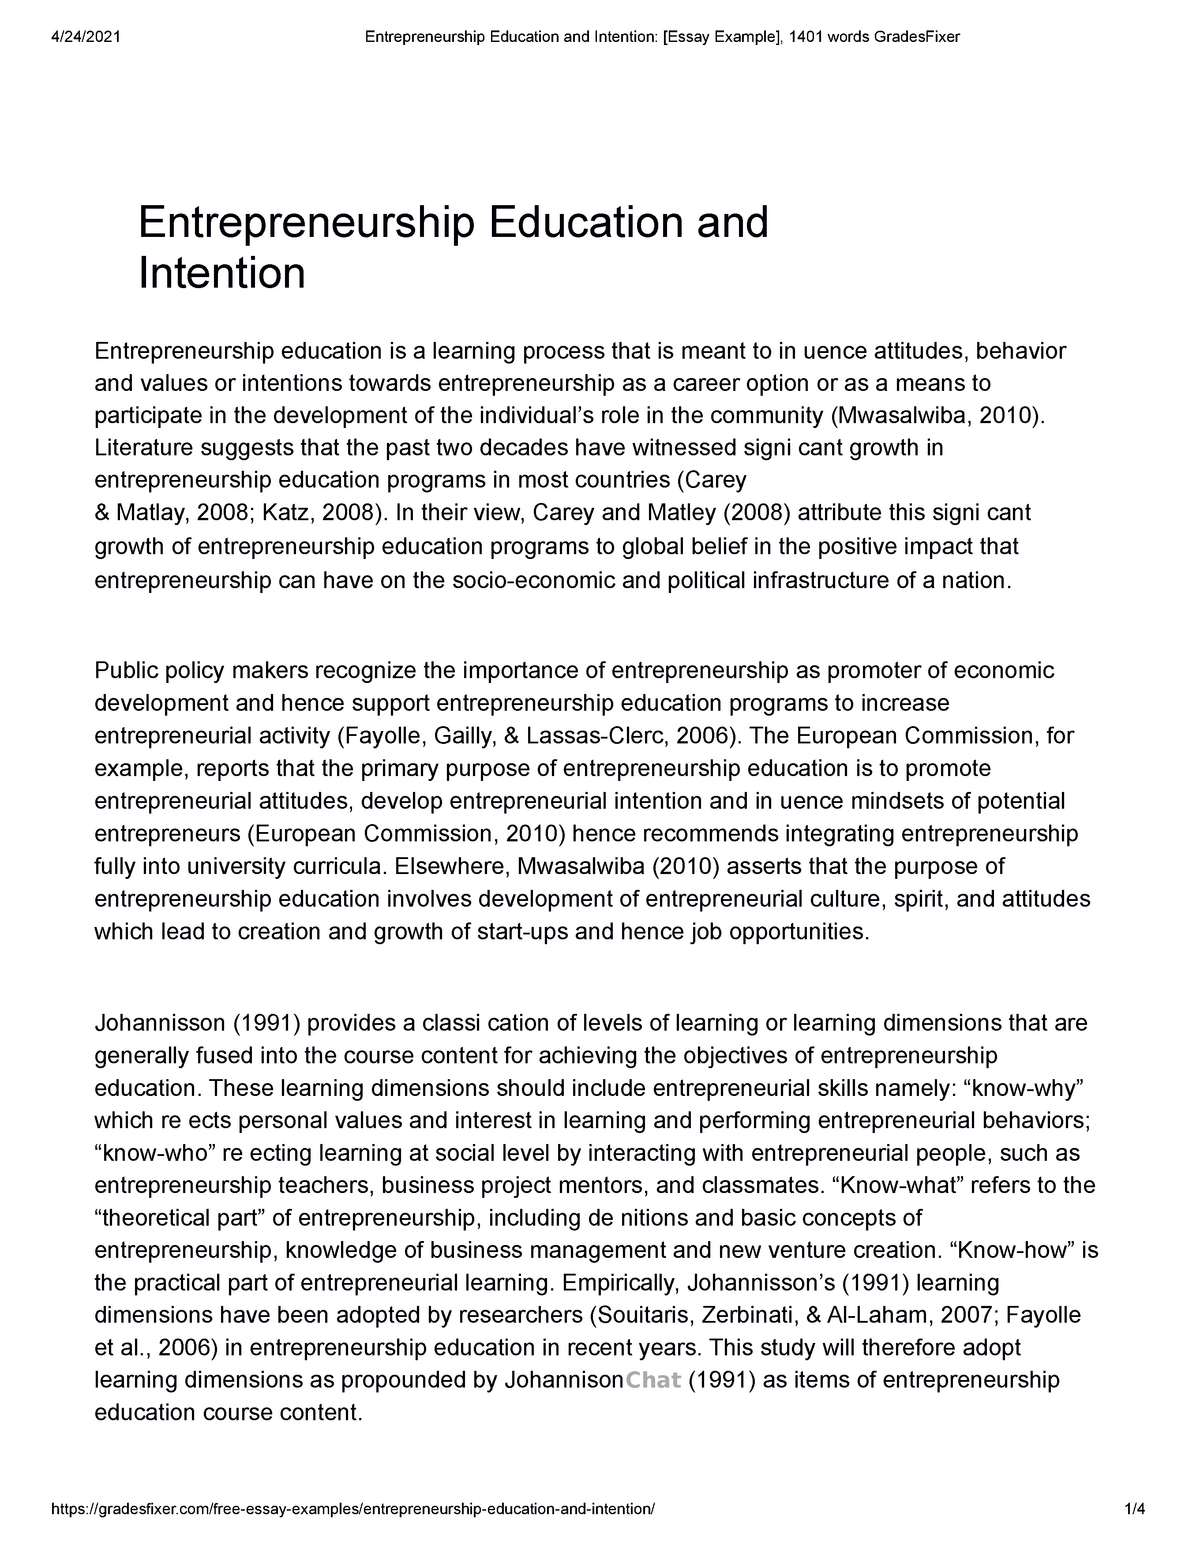 essay on innovative entrepreneurship